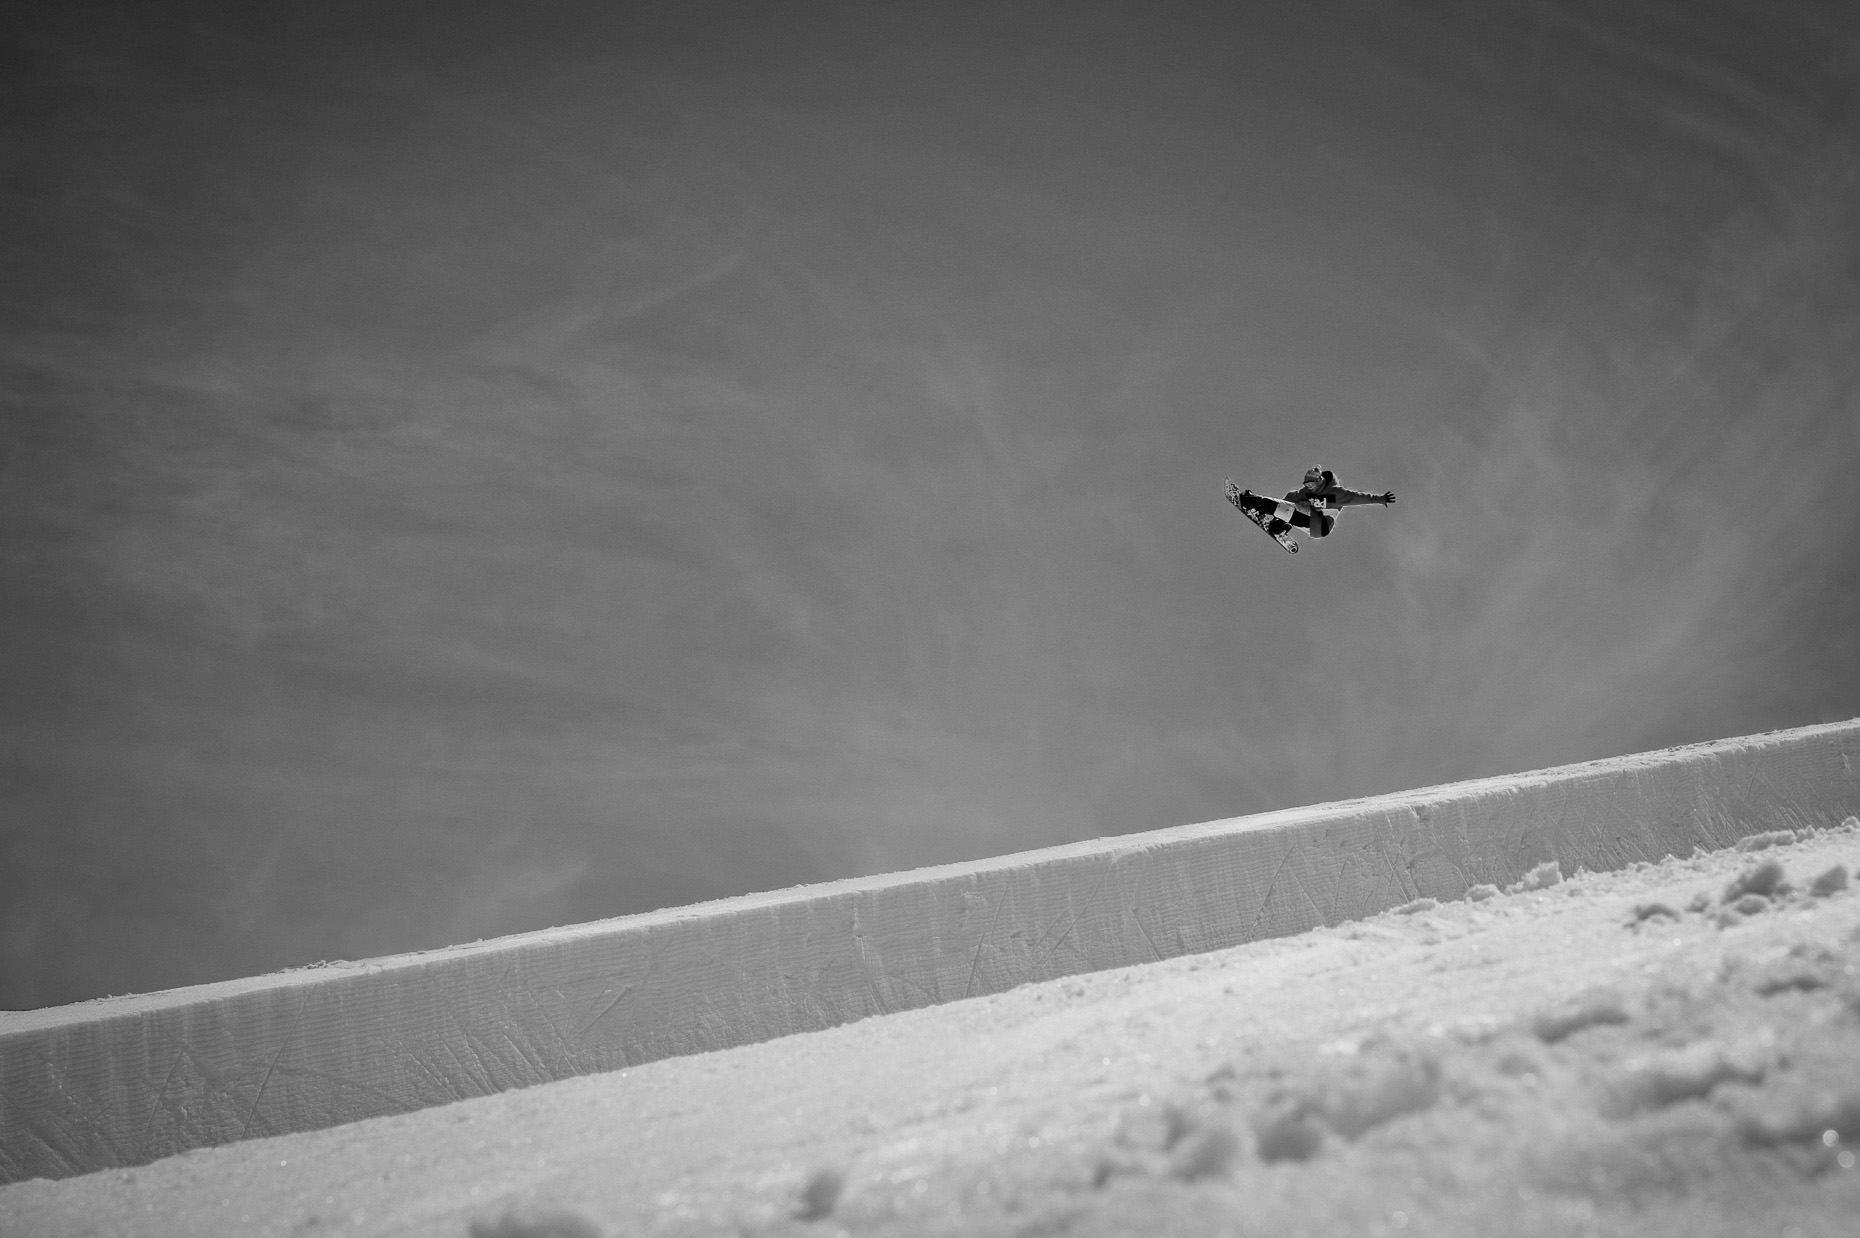 snowboarding_Christophe_Schmidt_ParkCity_April_2010_c_Brecheis-4852-2.jpg